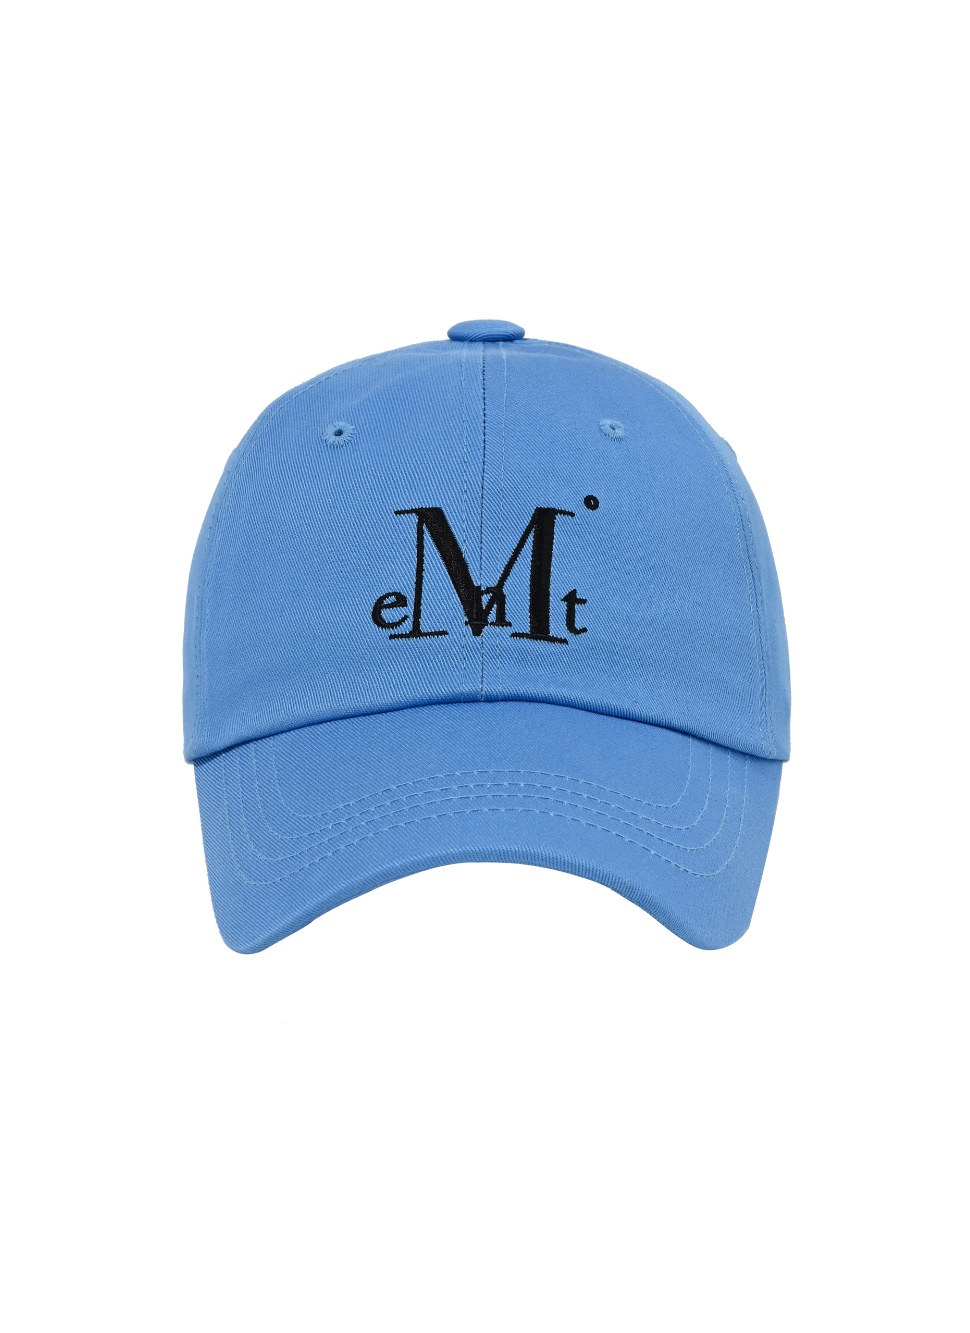 MUCENT BALL CAP - 무센트 볼캡 (Pastel blue)